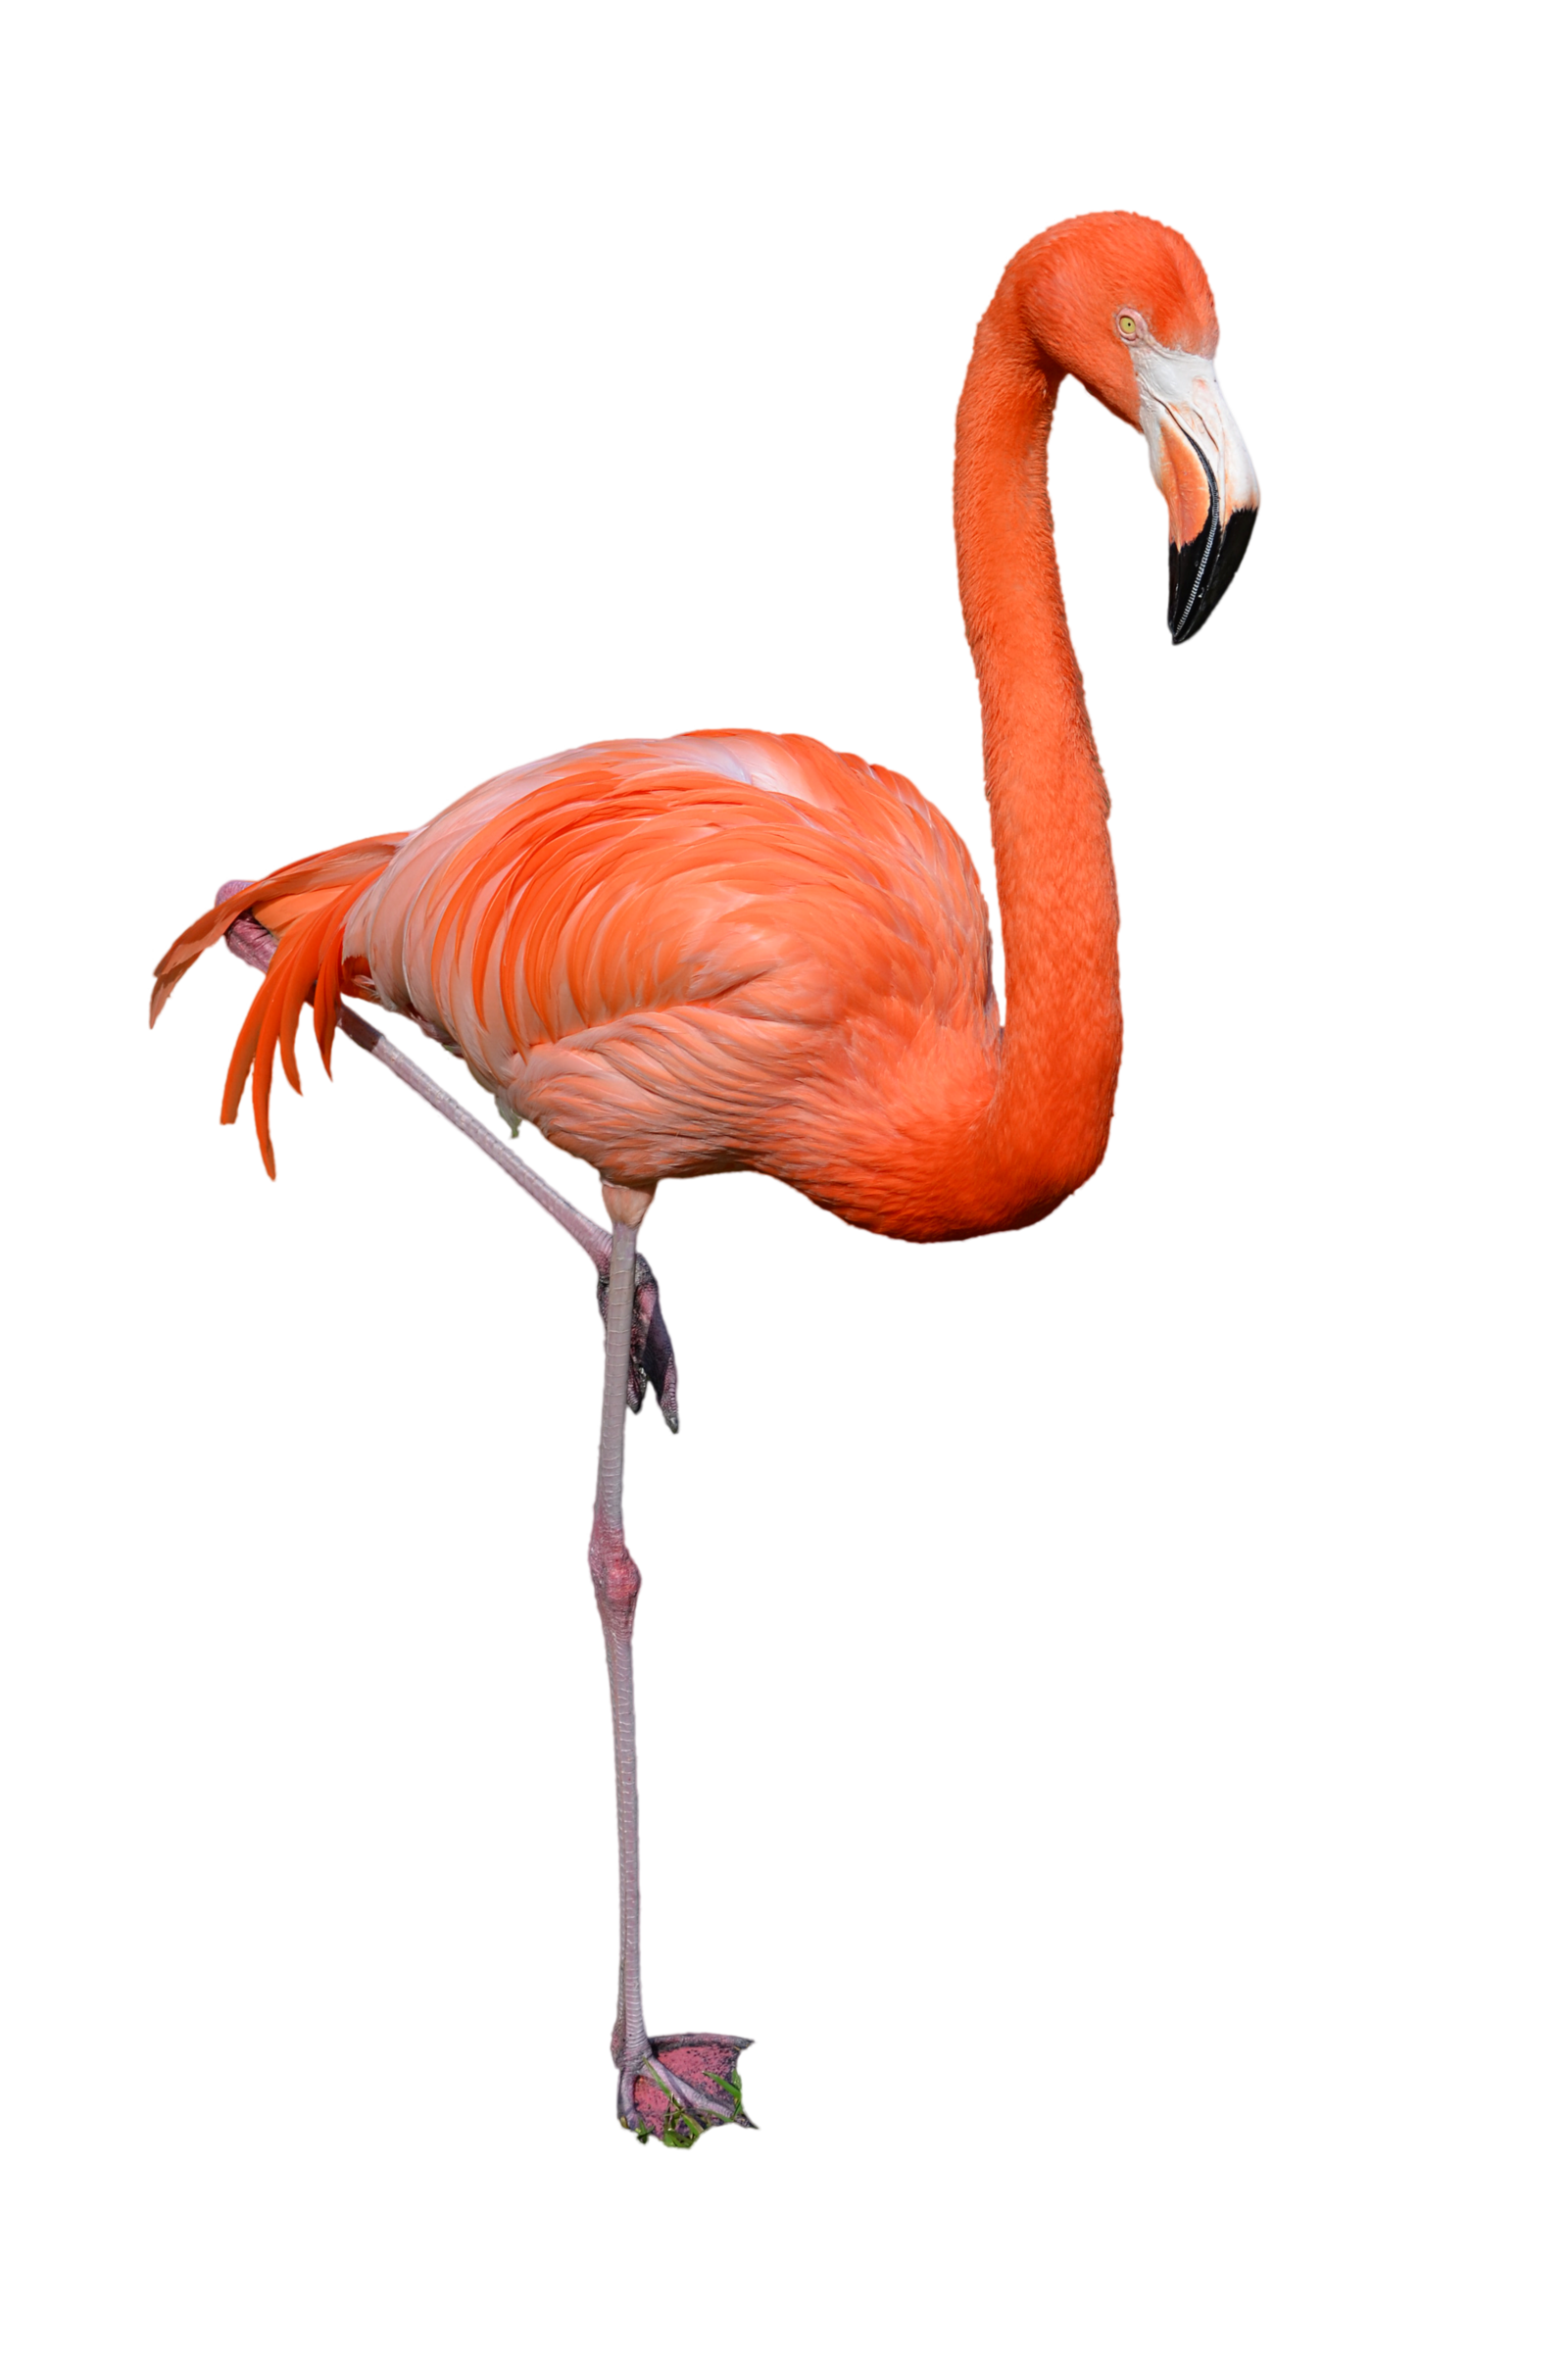 face clipart flamingo